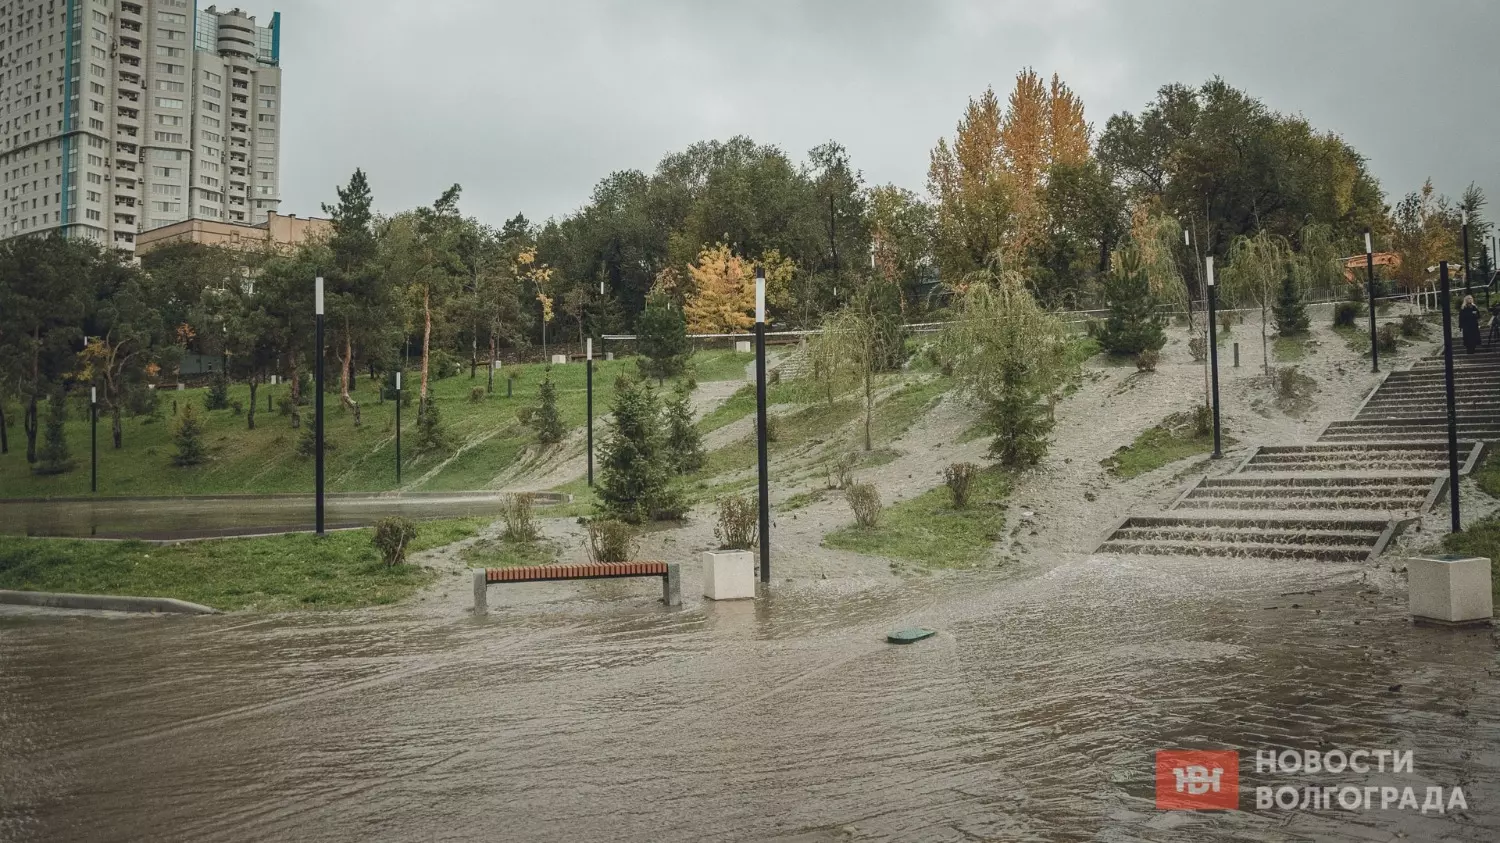 Ровно год назад пойму реки Царицы в Волгограде заливало фекалиями